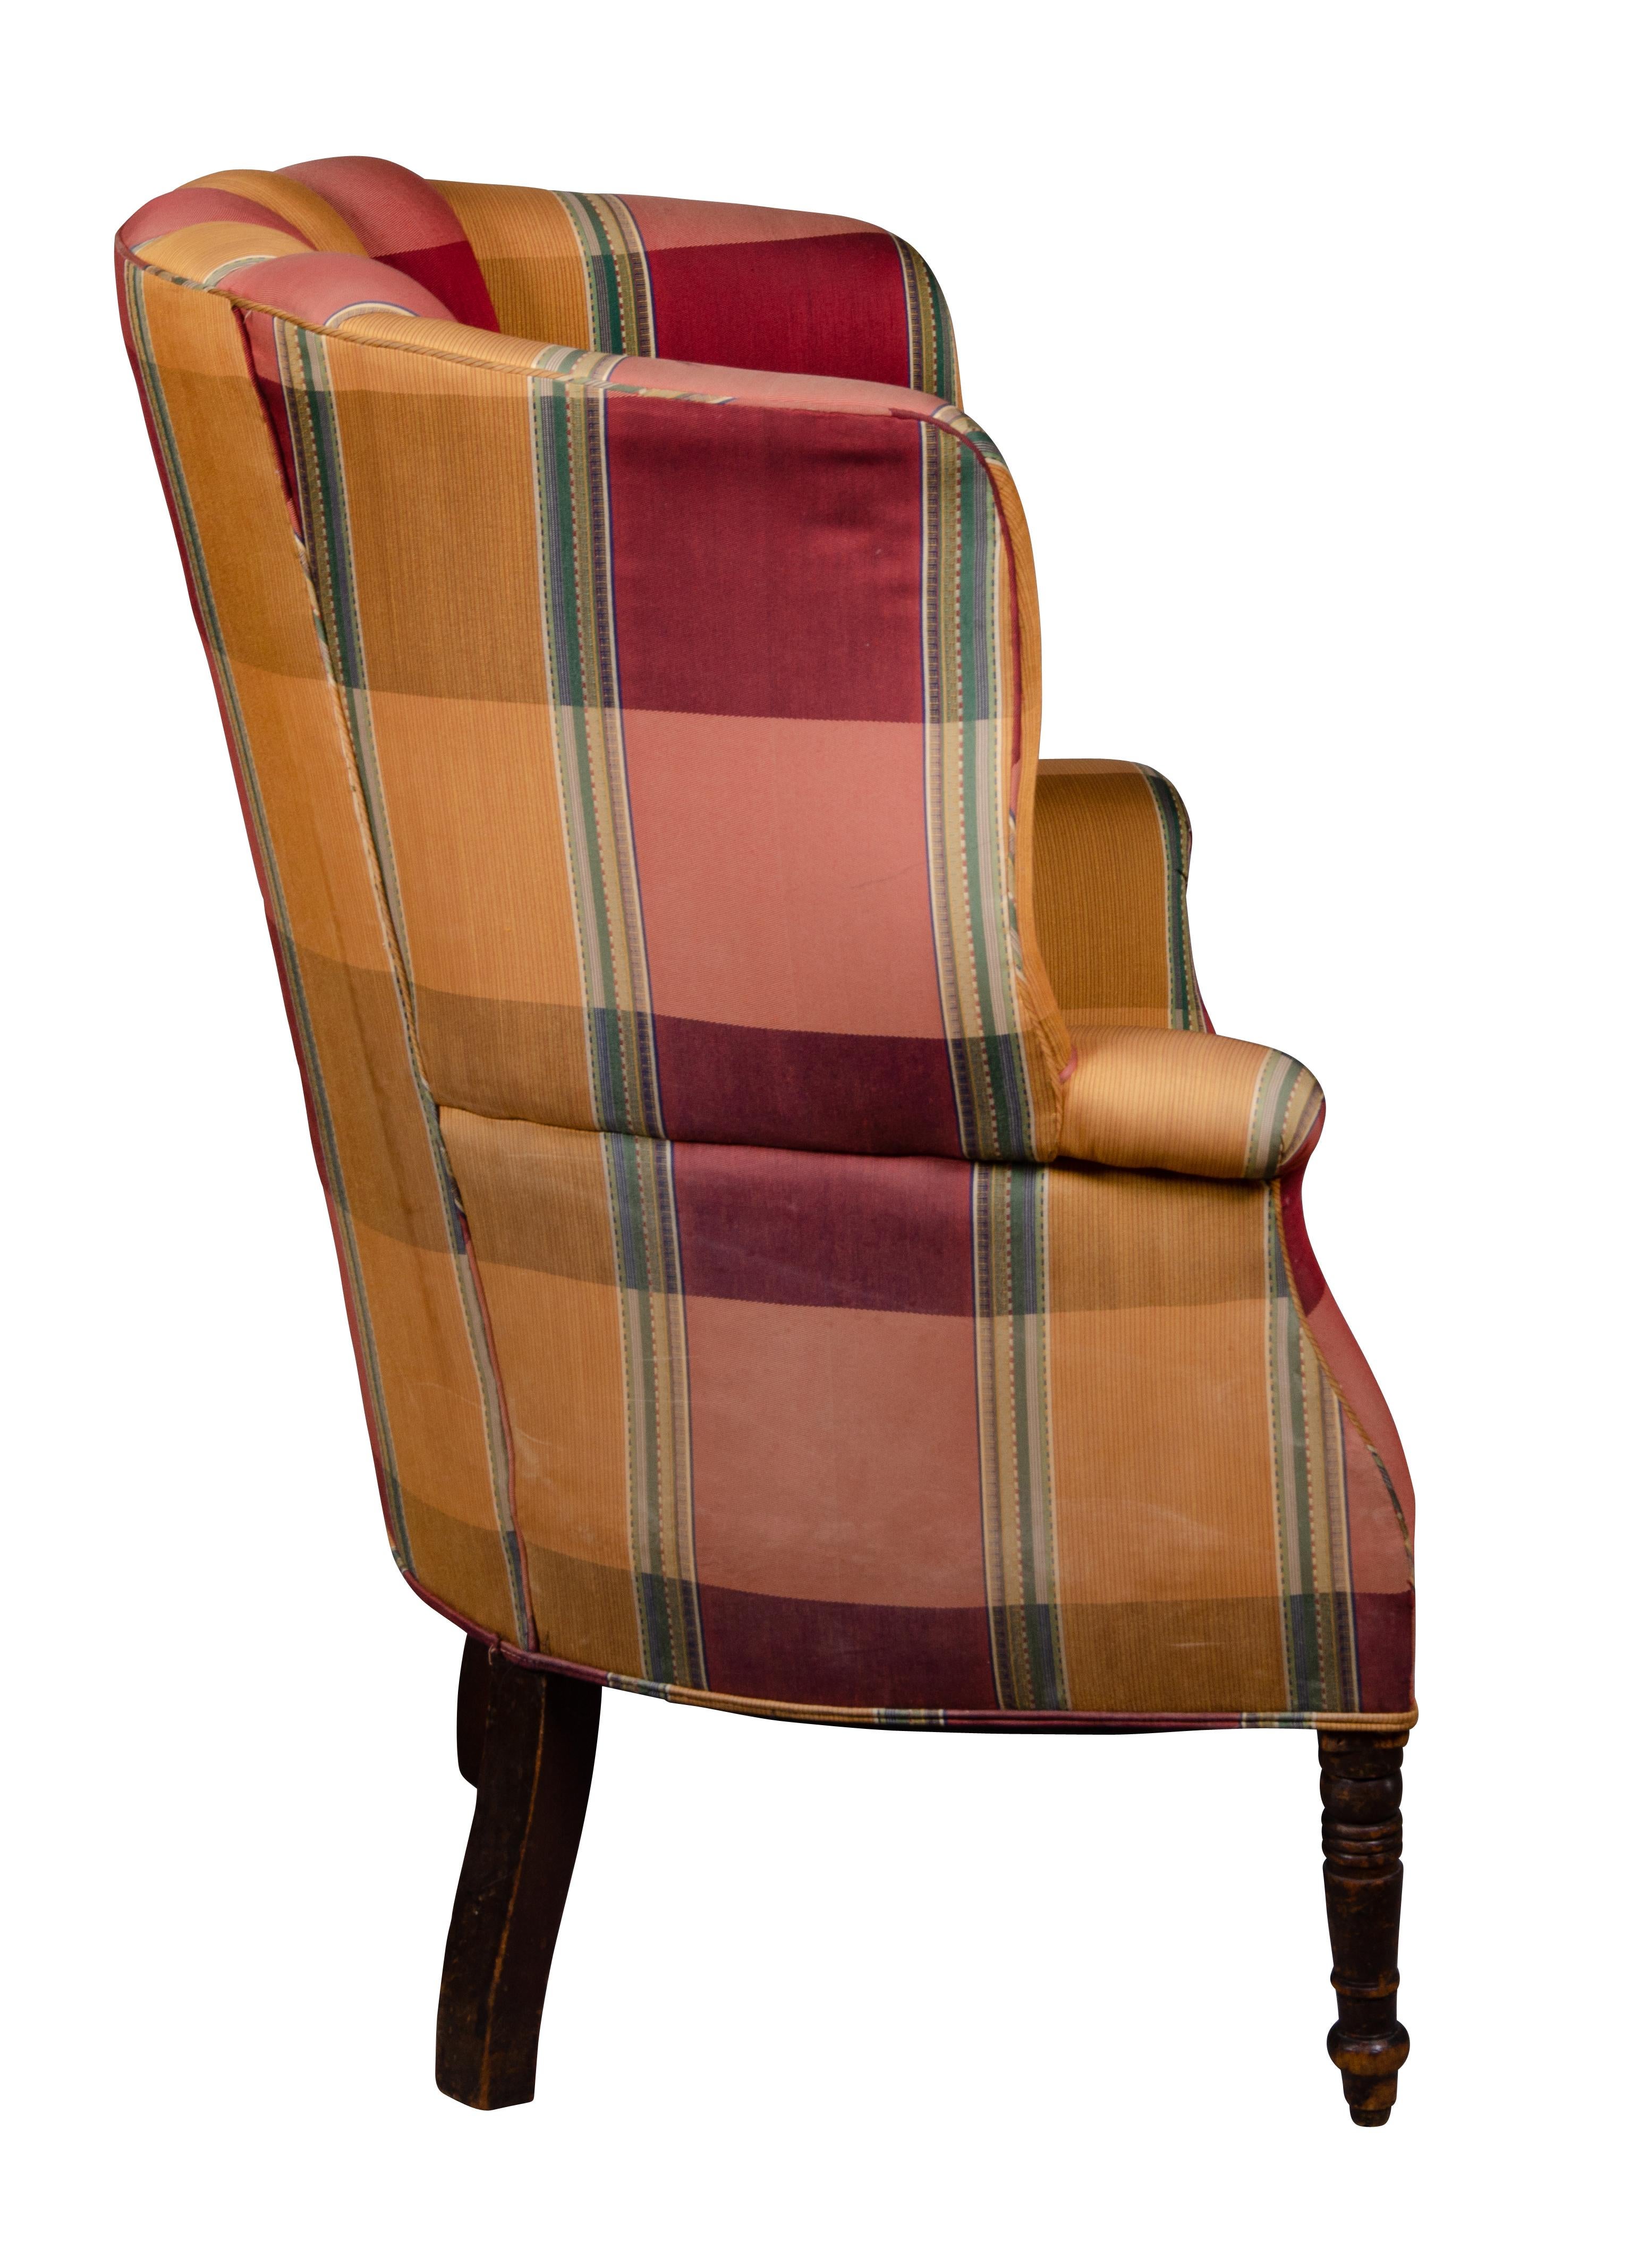 19th Century Regency Mahogany Barrel Back Wing Chair